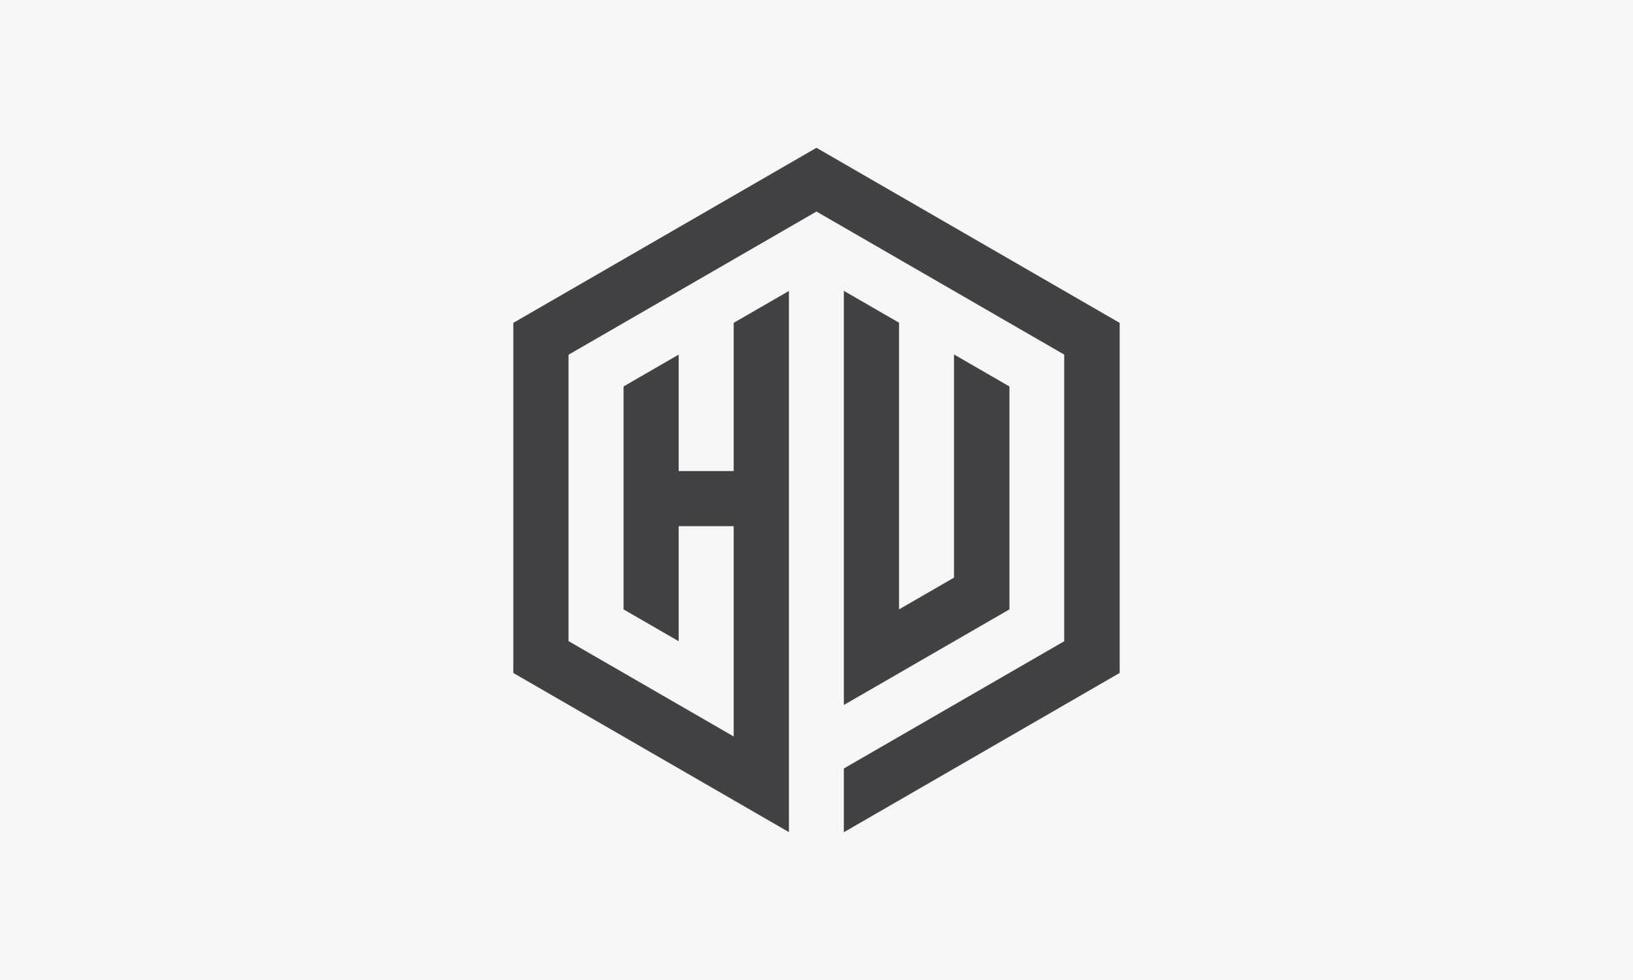 HU hexagon letter logo isolated on white background. vector